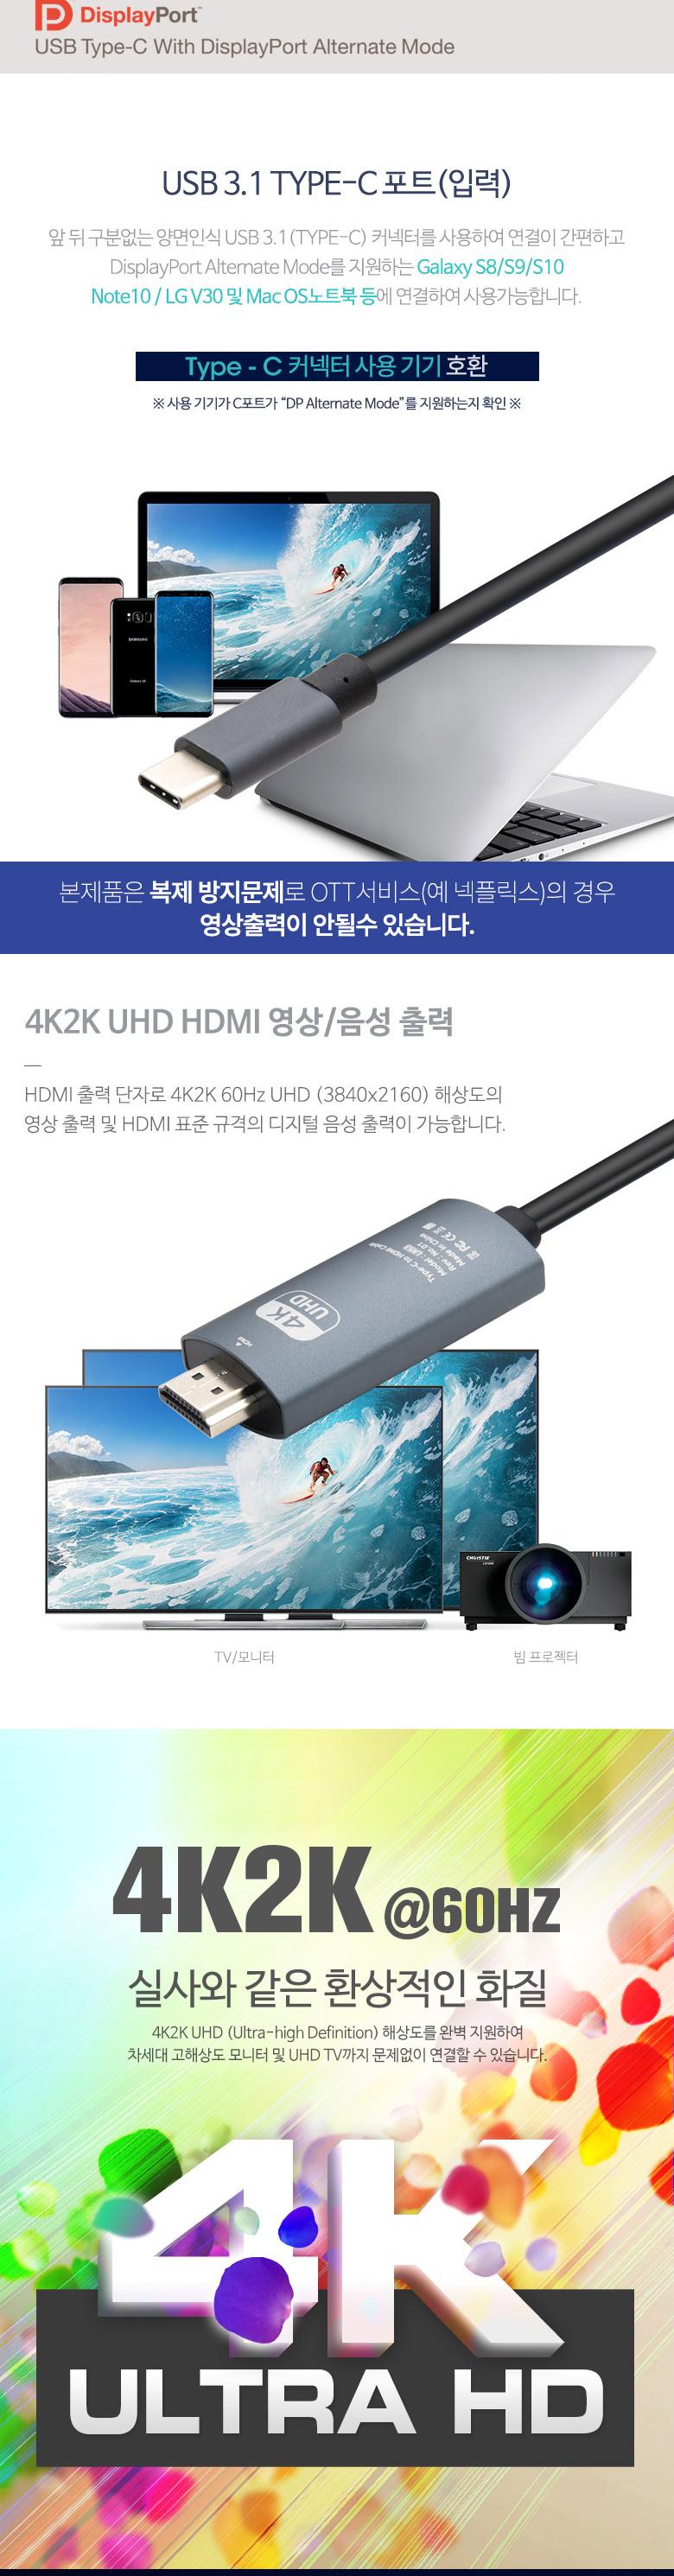 Coms USB 3.1 컨버터 케이블 Type C to HDMI 2.0 4K 60Hz USB 전원 5M 컨버터케이블 컨버터 케이블 컨버터선 C타입컨버터케이블 C타입컨버터 C타입케이블 C타입컨버터선 HDMI컨버터케이블 HDMI컨버터선